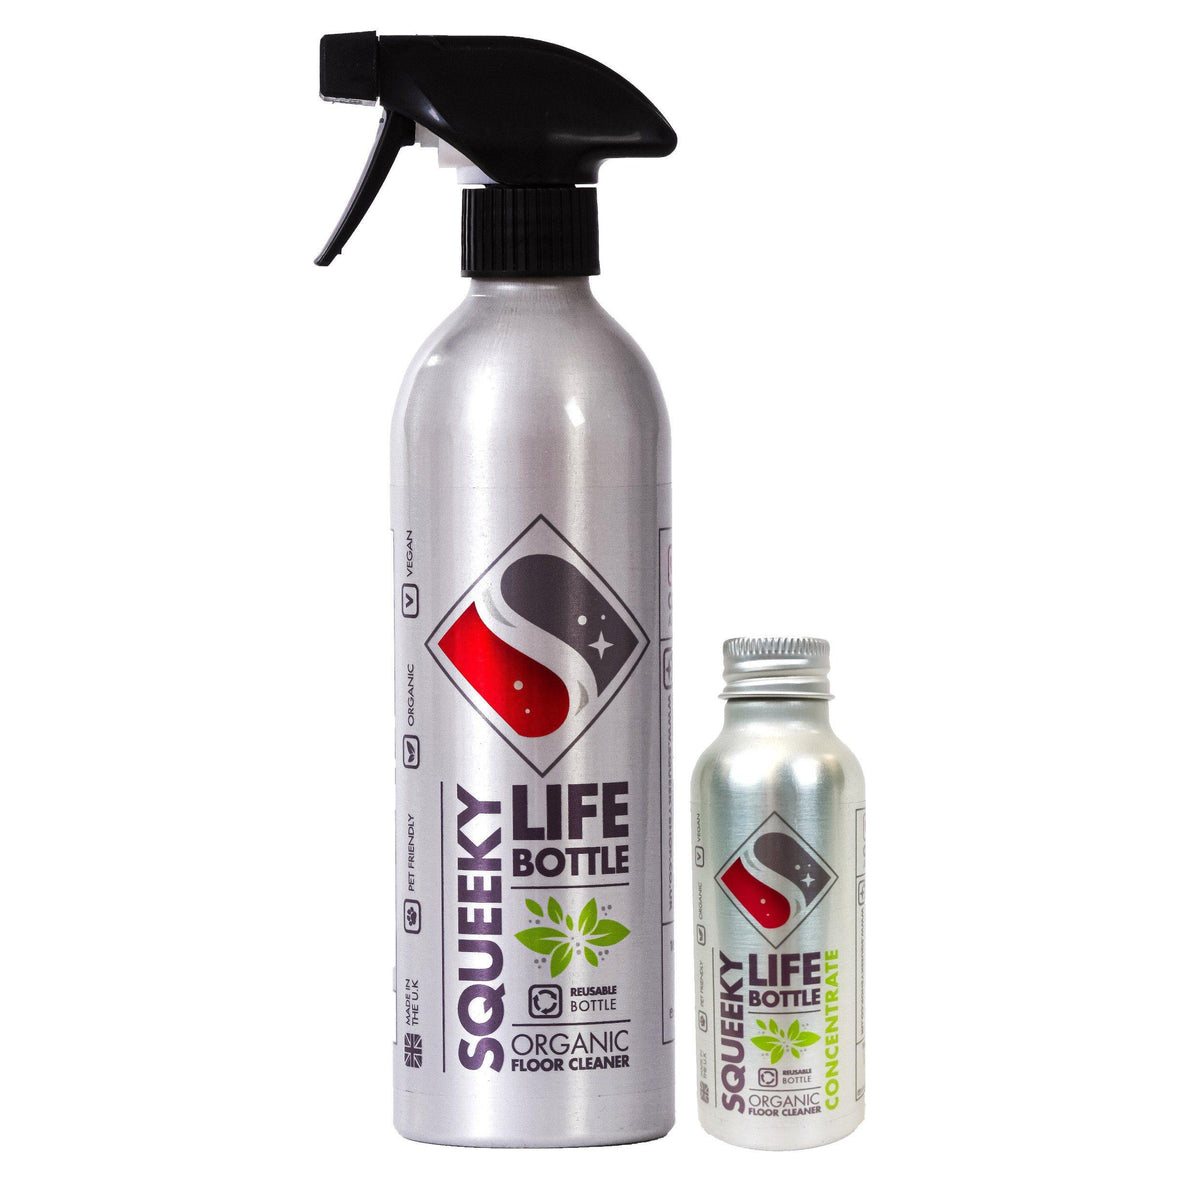 Organic - Floor Cleaner Life Bottle Bundle Cleaning Products Foxyavenue UK